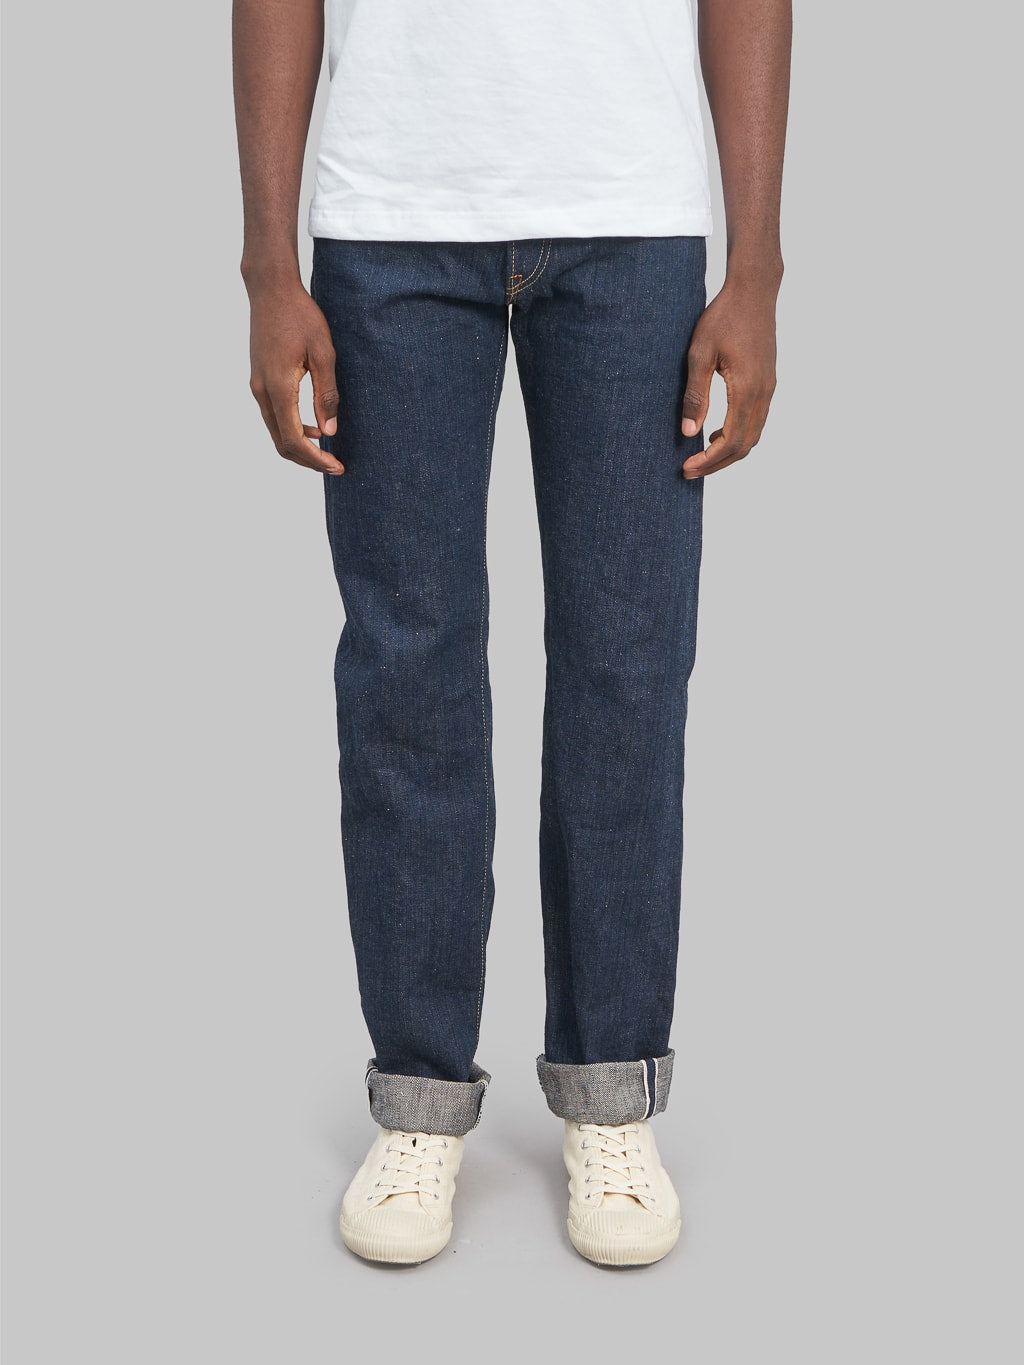 Oni denim kiwami indigo regular selvedge jeans front fit